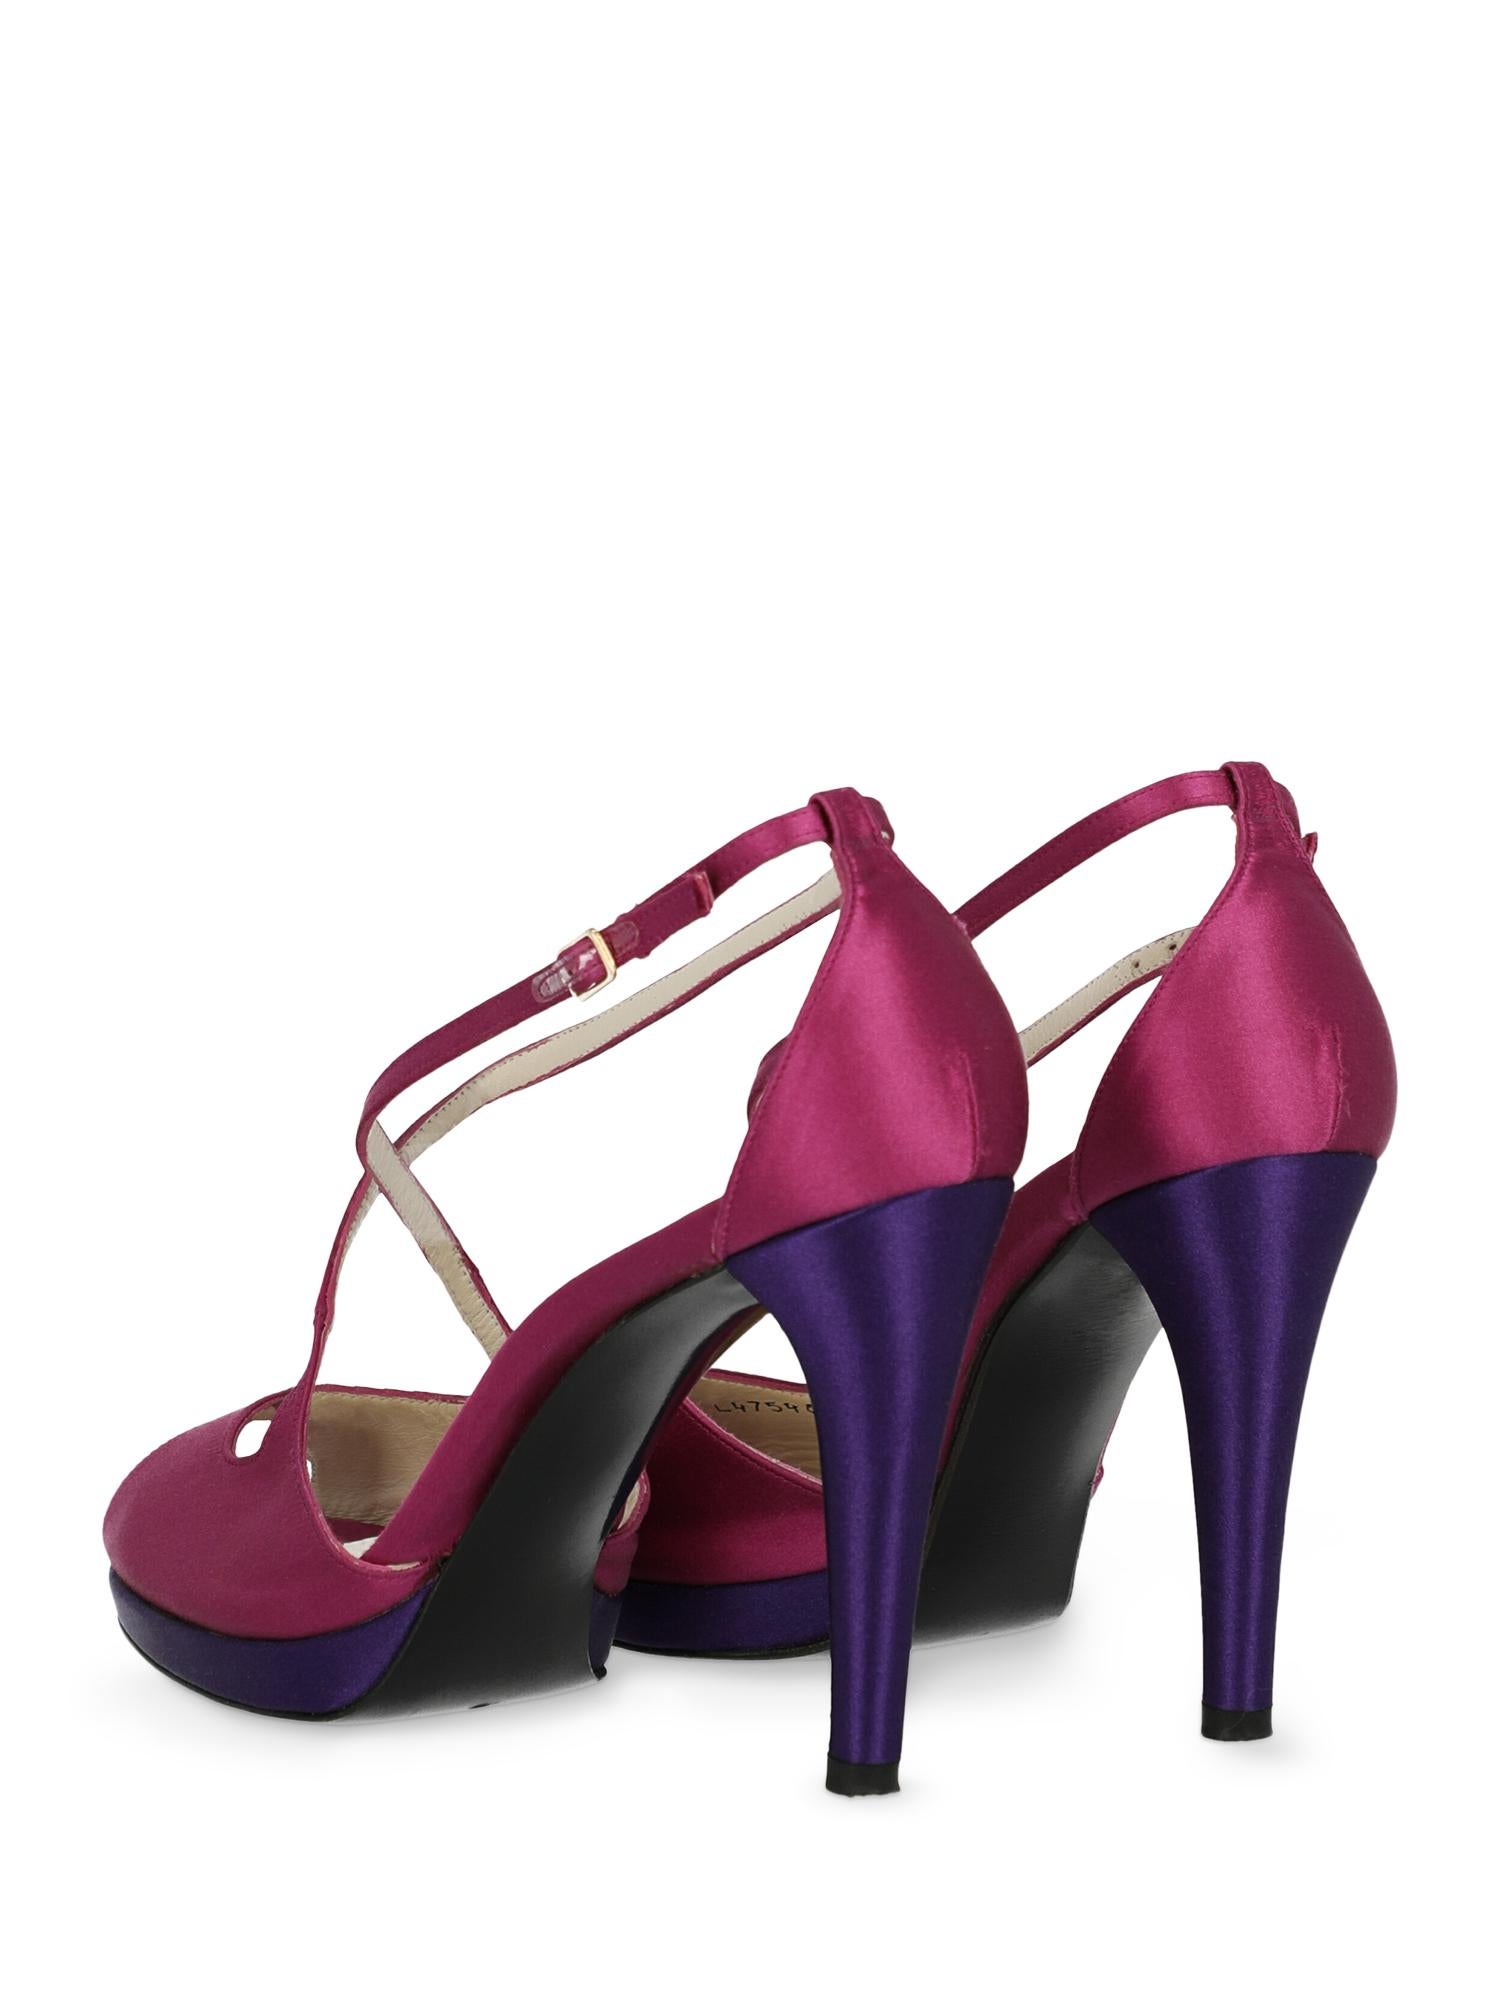 Stuart Weitzman Woman Sandals Pink, Purple EU 40 In Fair Condition For Sale In Milan, IT